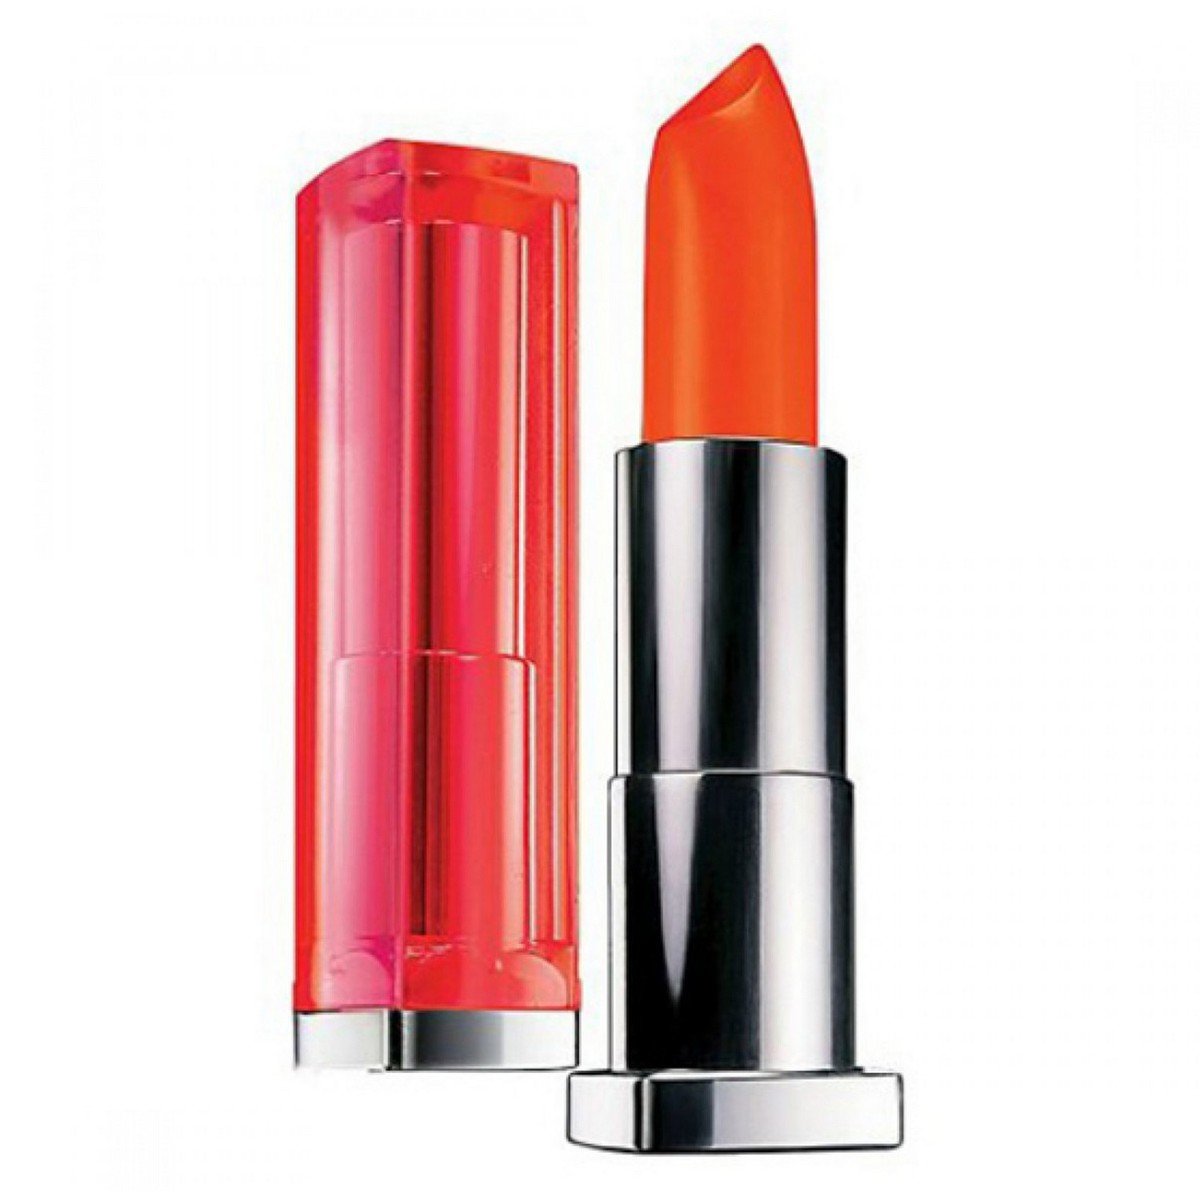 Maybelline New York Color Sensational Vivid Lipstick 912 Electric Orange 1pc